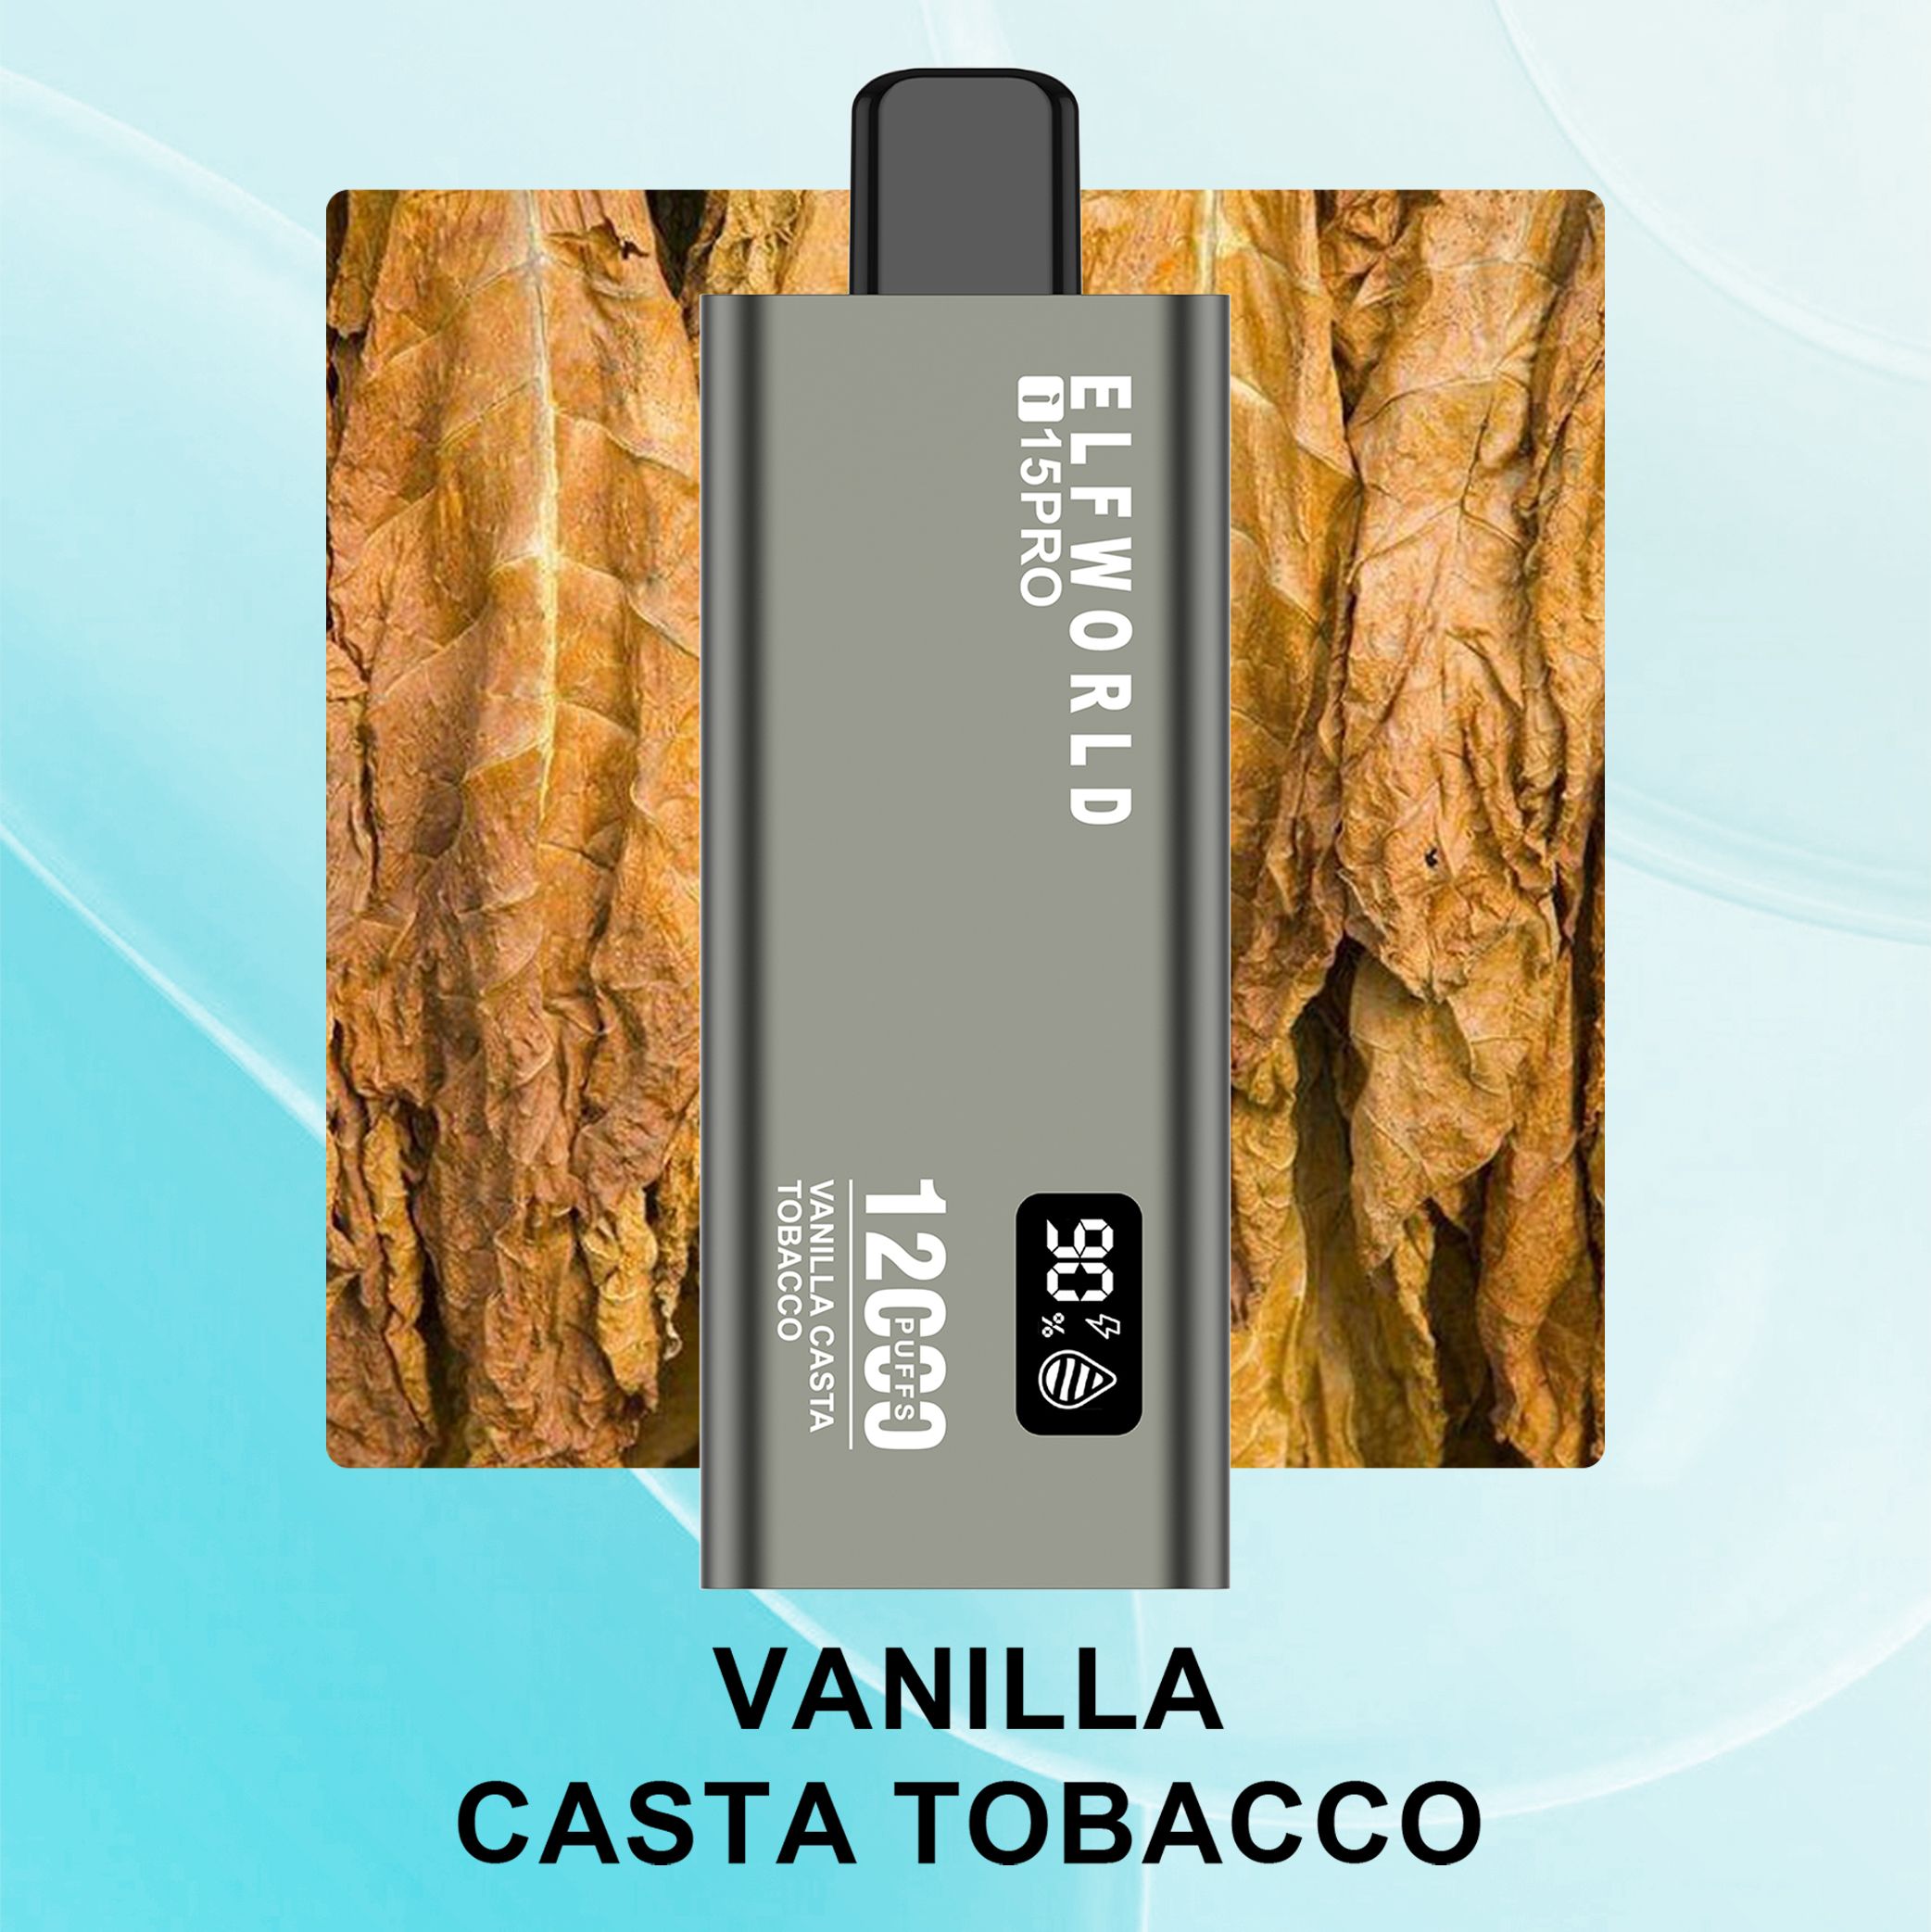 4.Vanilla Casta Tobacco